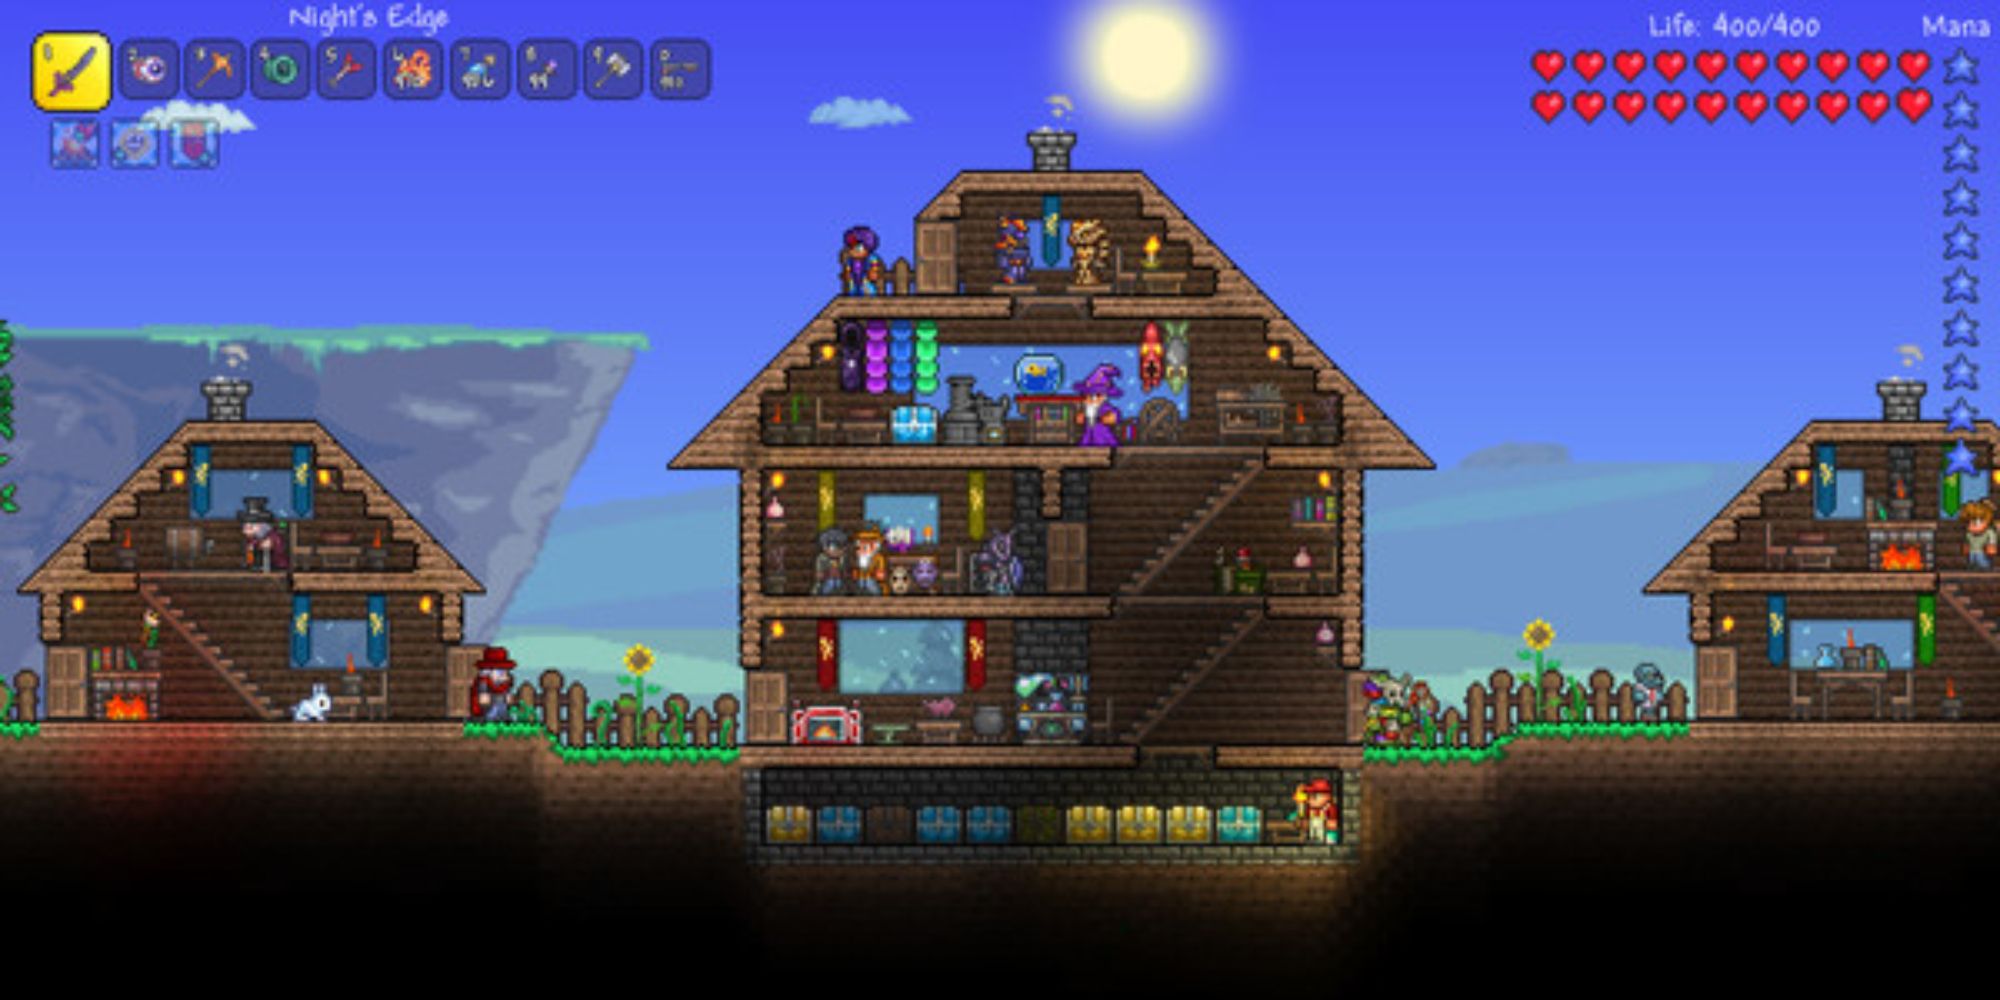 a screenshot from Terraria showcasing a player's built house